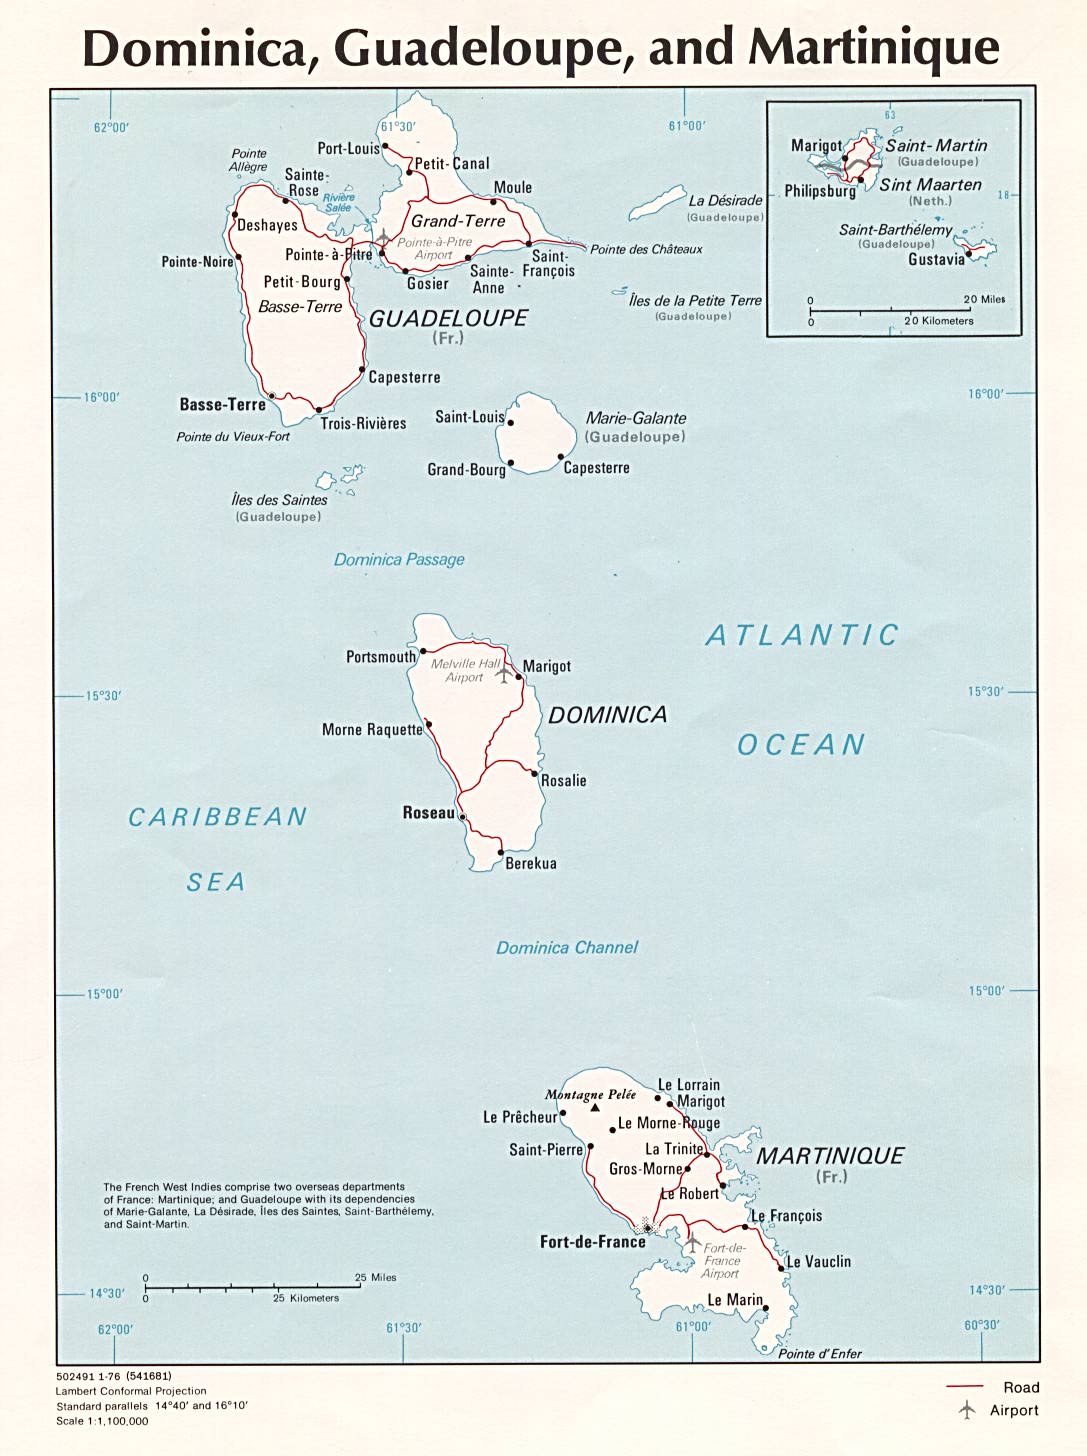 Dominica, Guadeloupe and Martinique Political Map